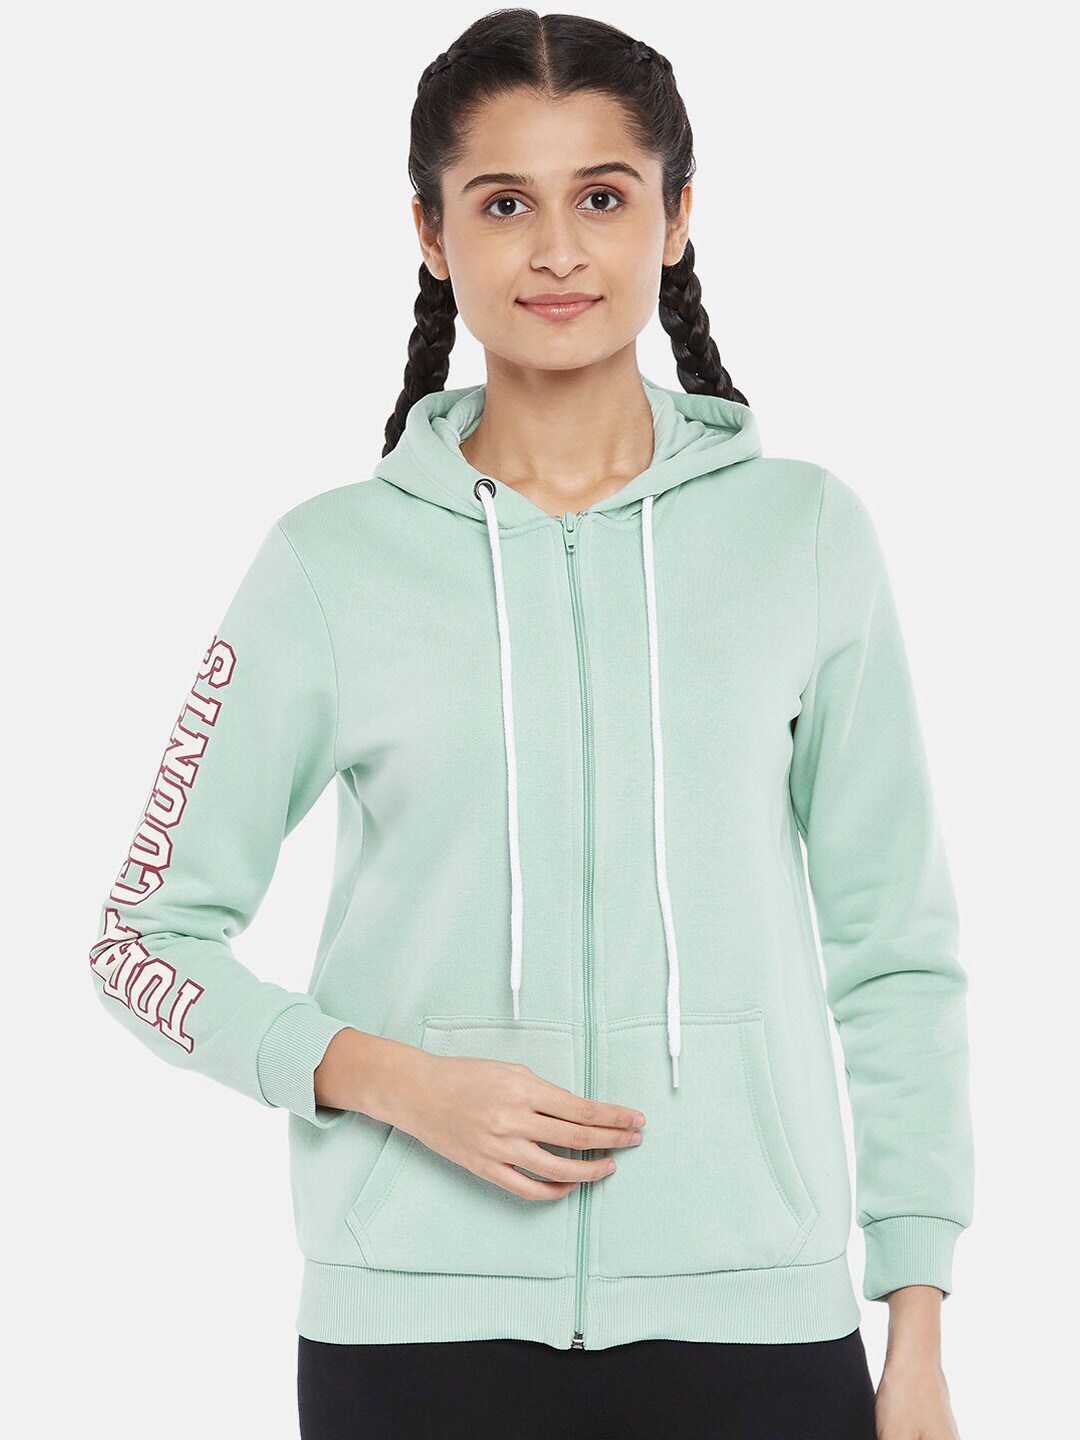 Ajile by Pantaloons Women Blue Hooded Sweatshirt Price in India